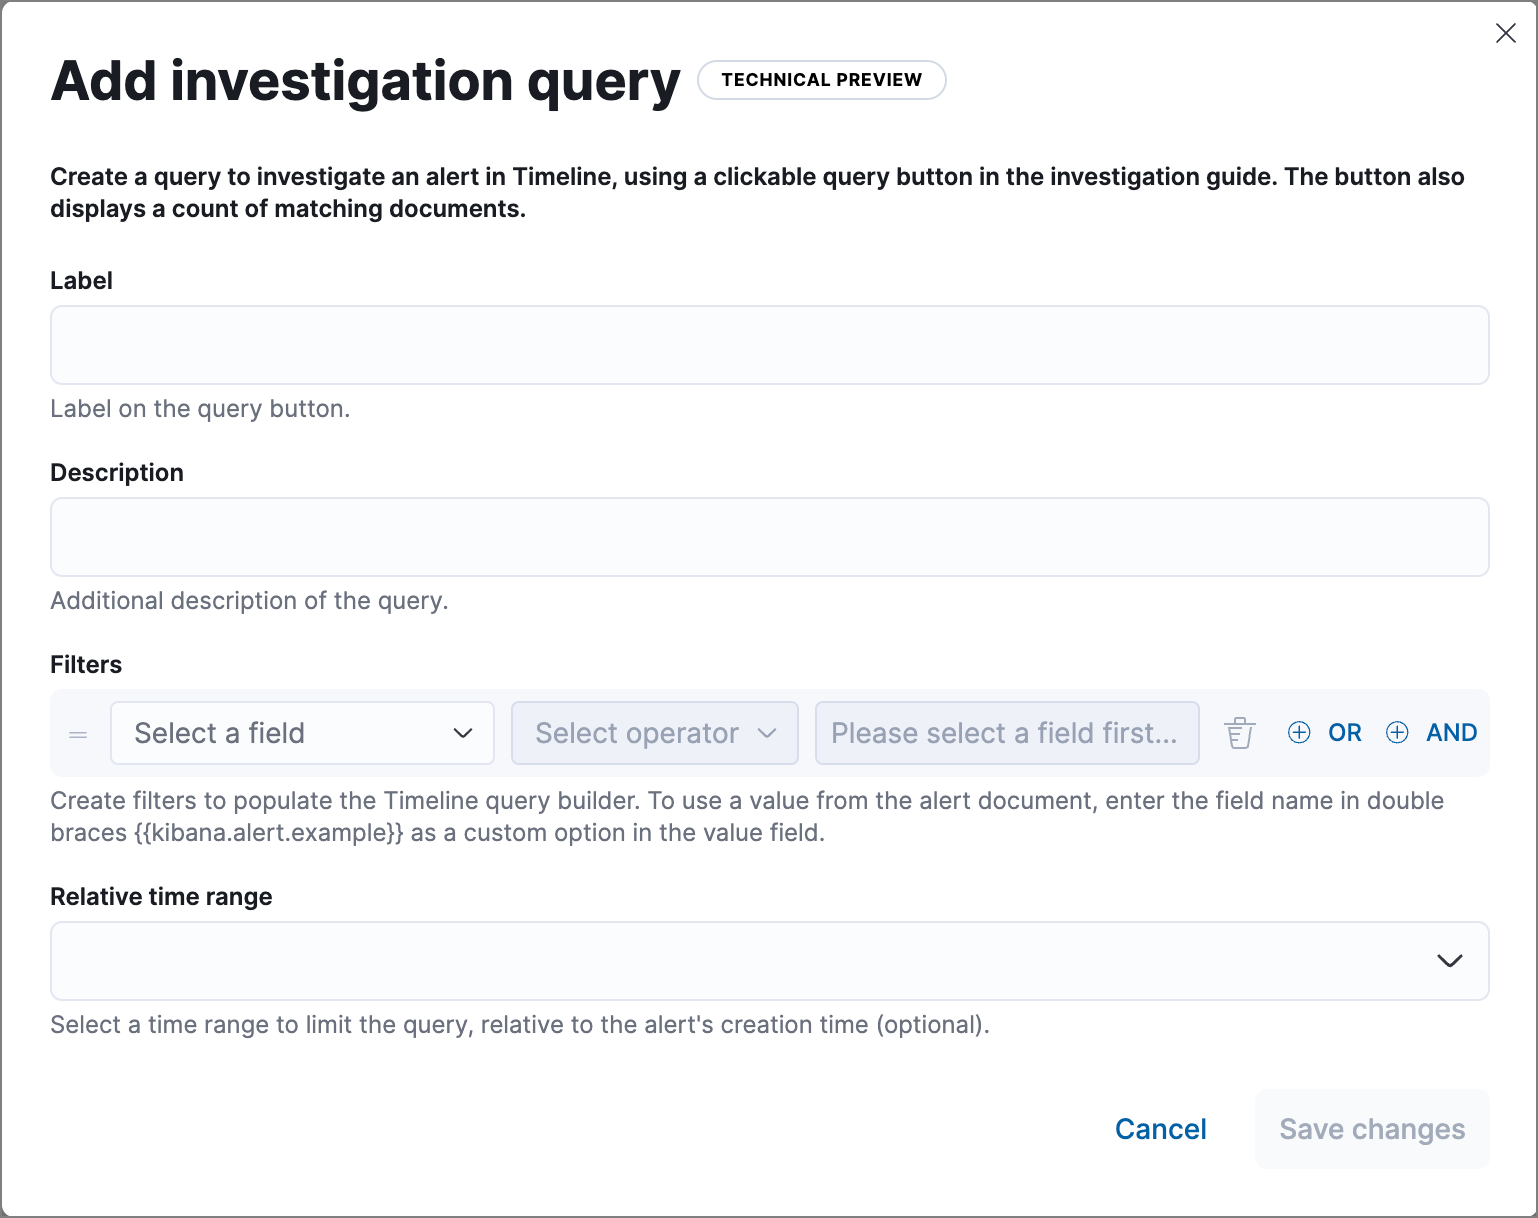 Add investigation query UI